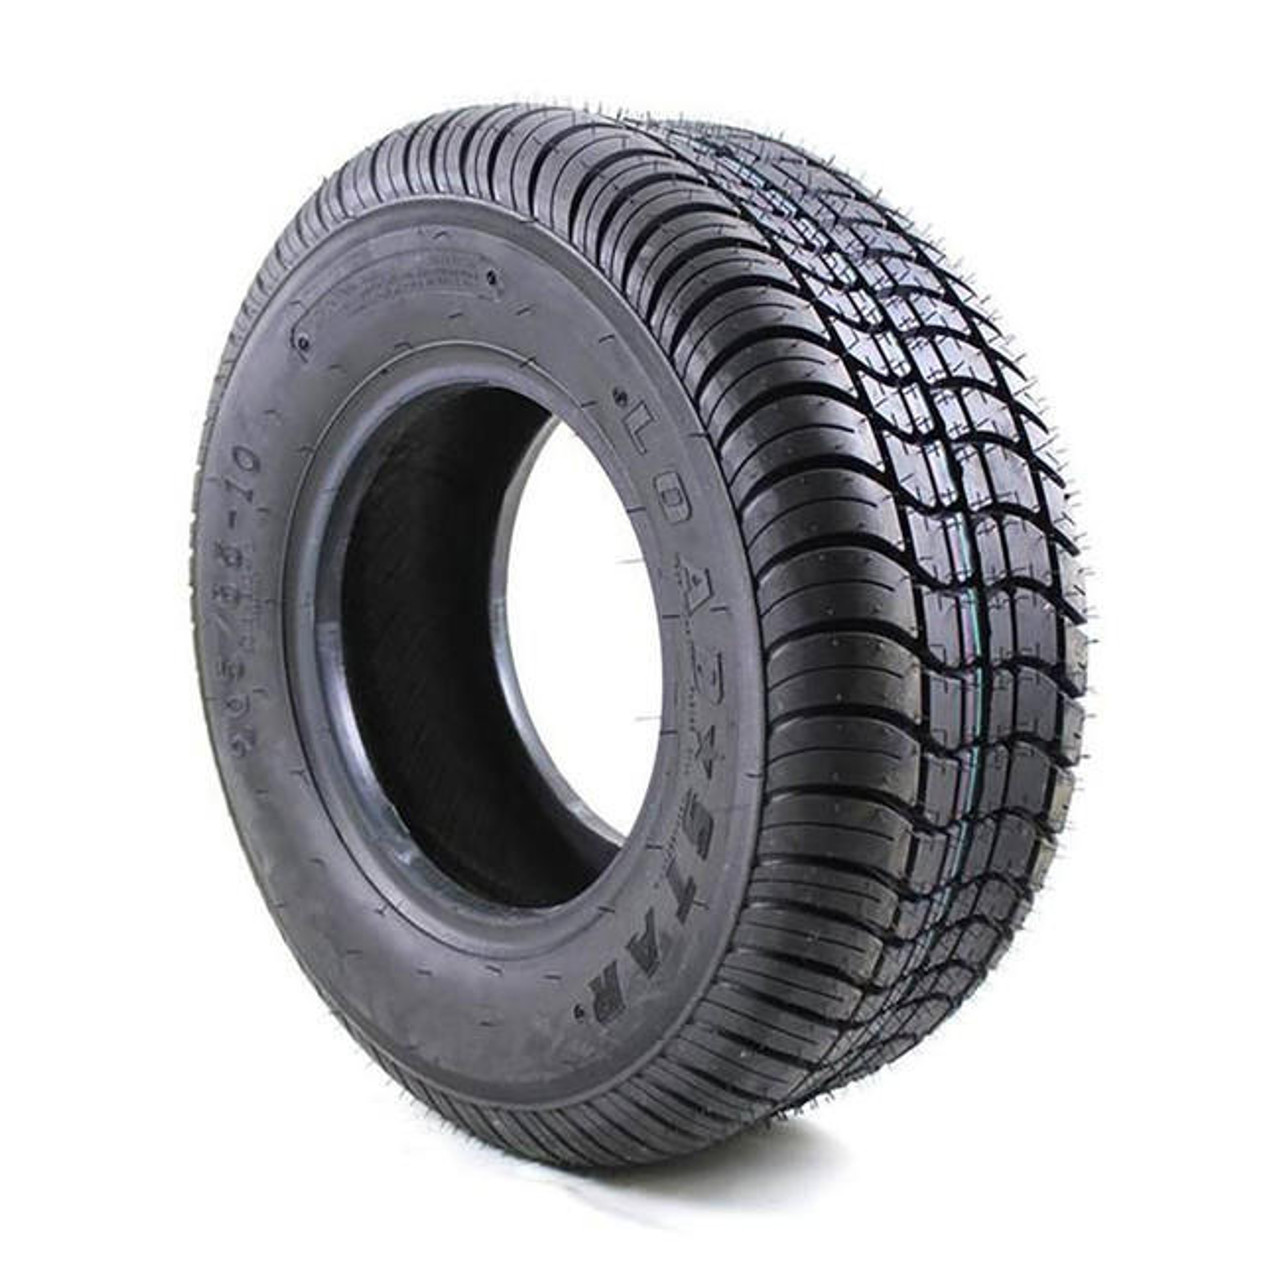 20.5X8.00-10 (205/65-10) Load Range E Bias Ply Trailer Tire - Kenda